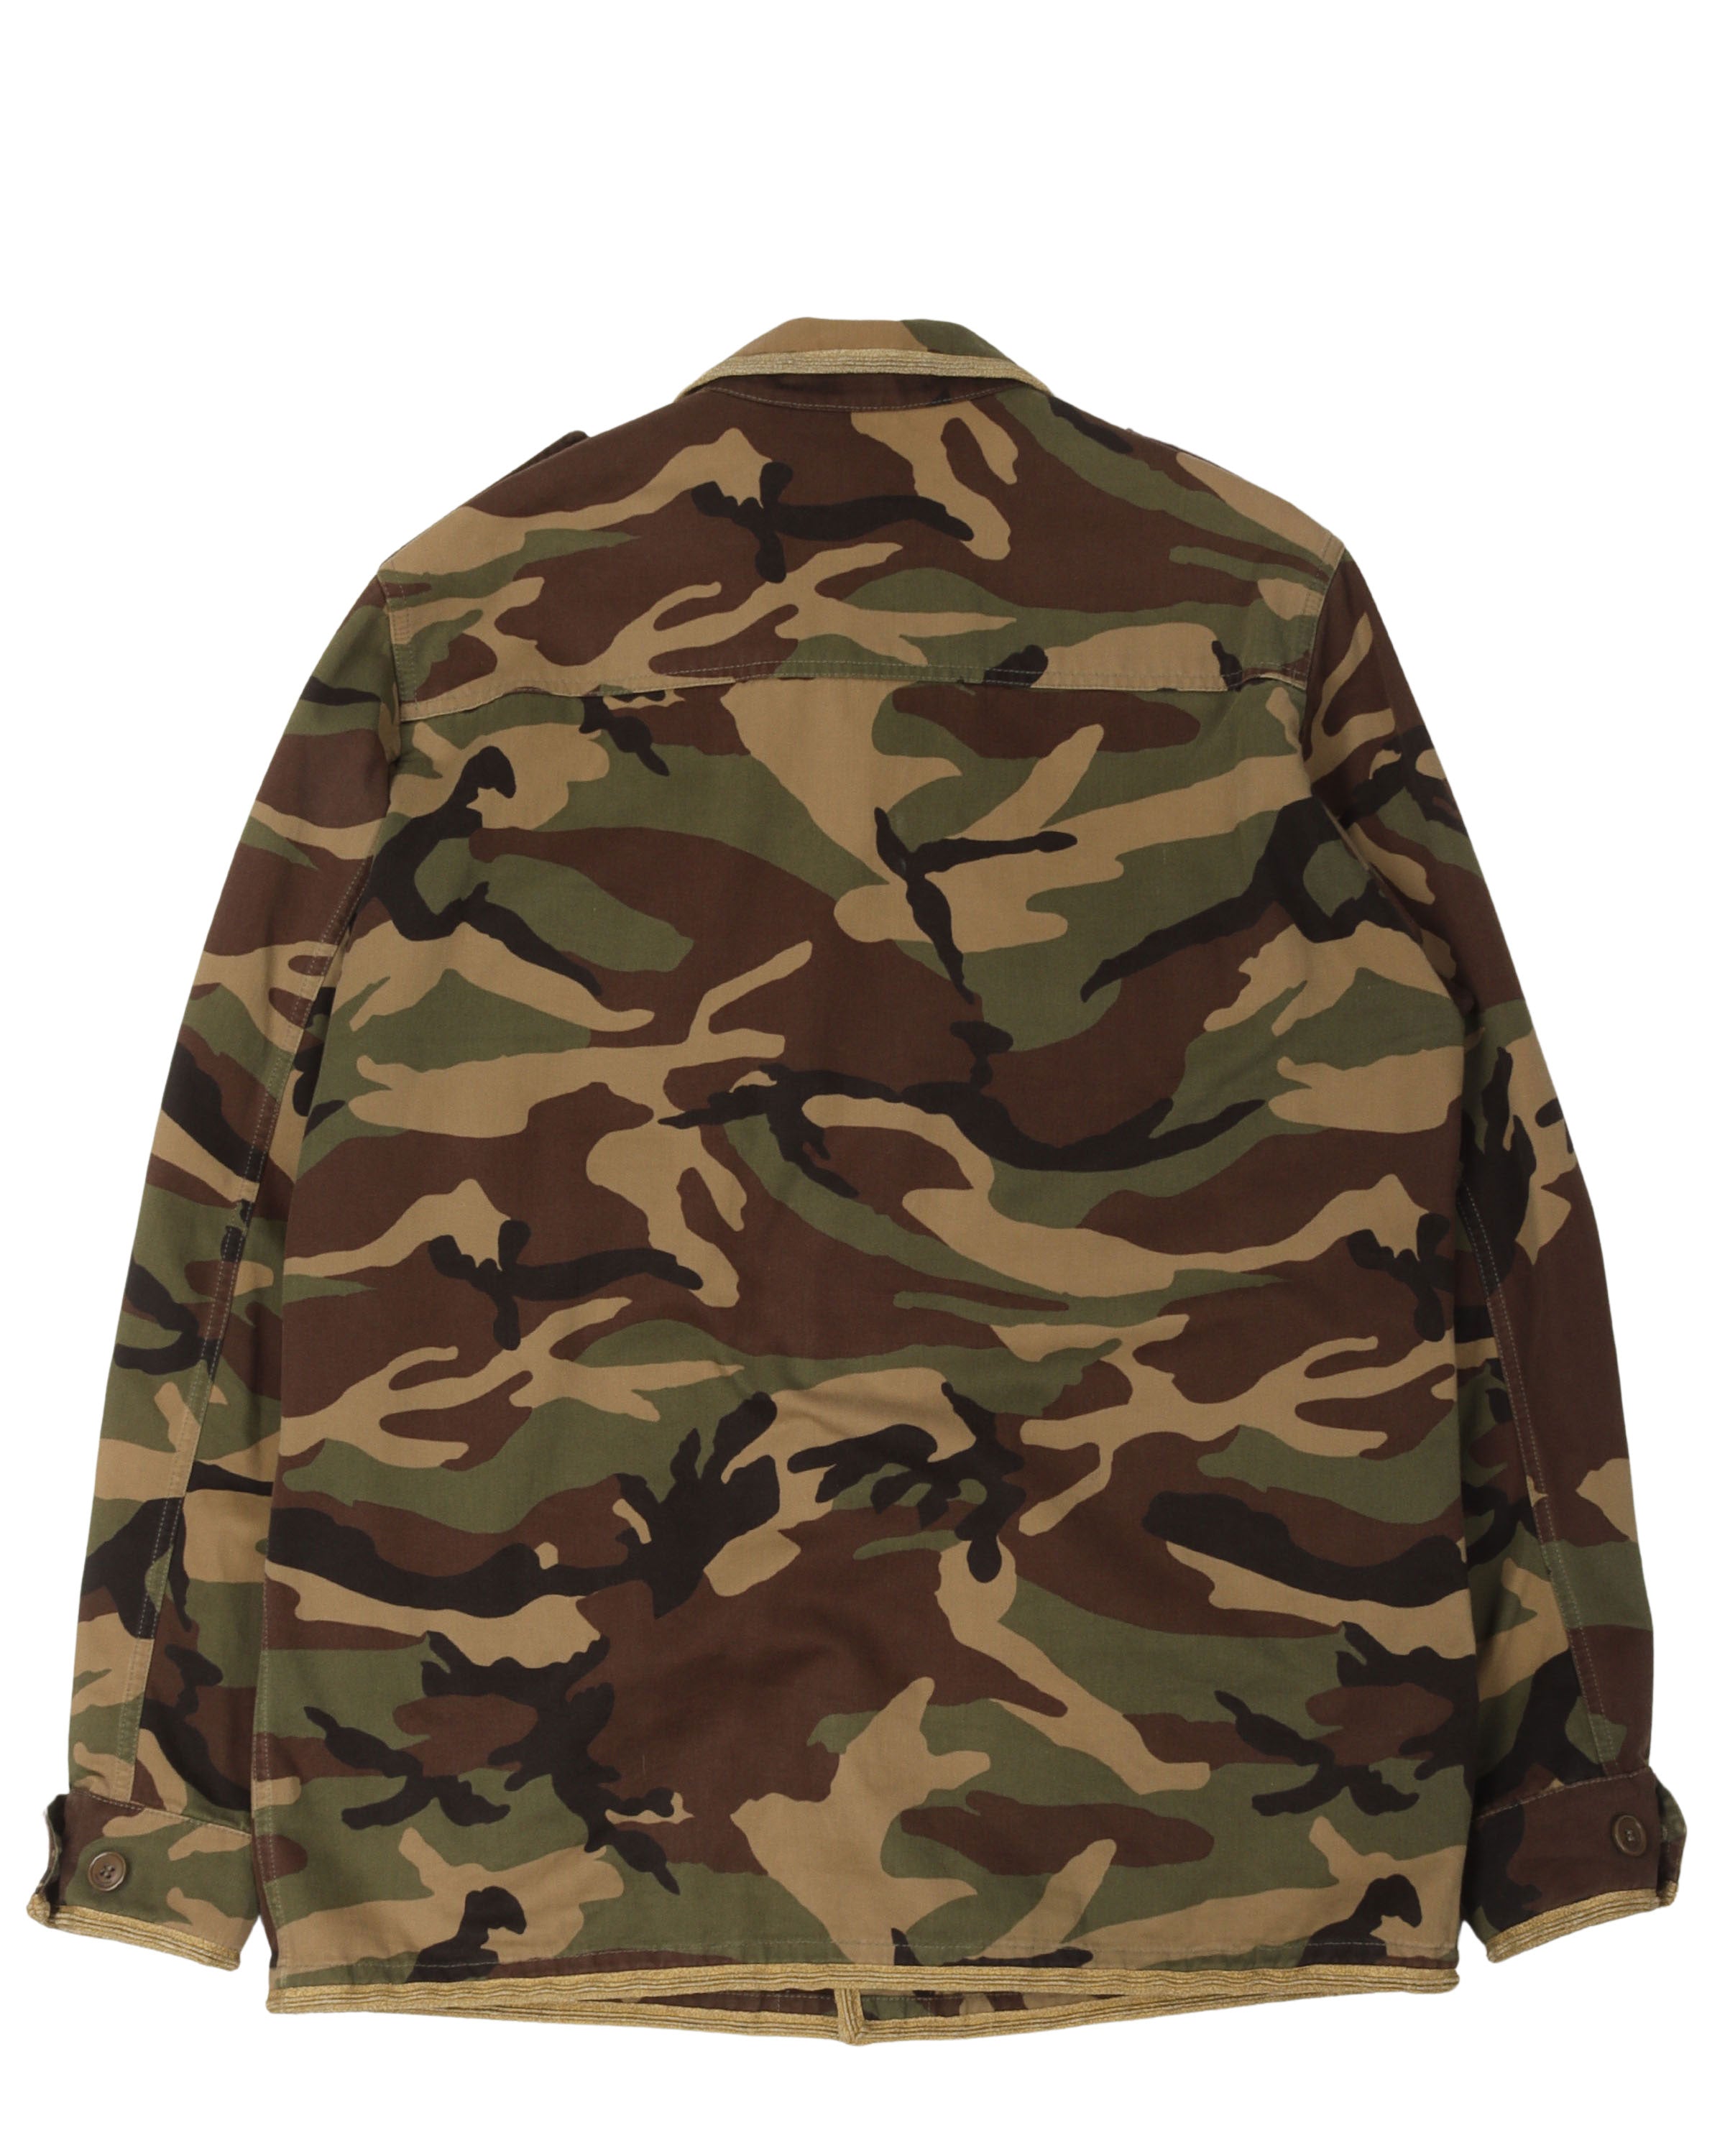 Gold Trim Camouflage Field Jacket